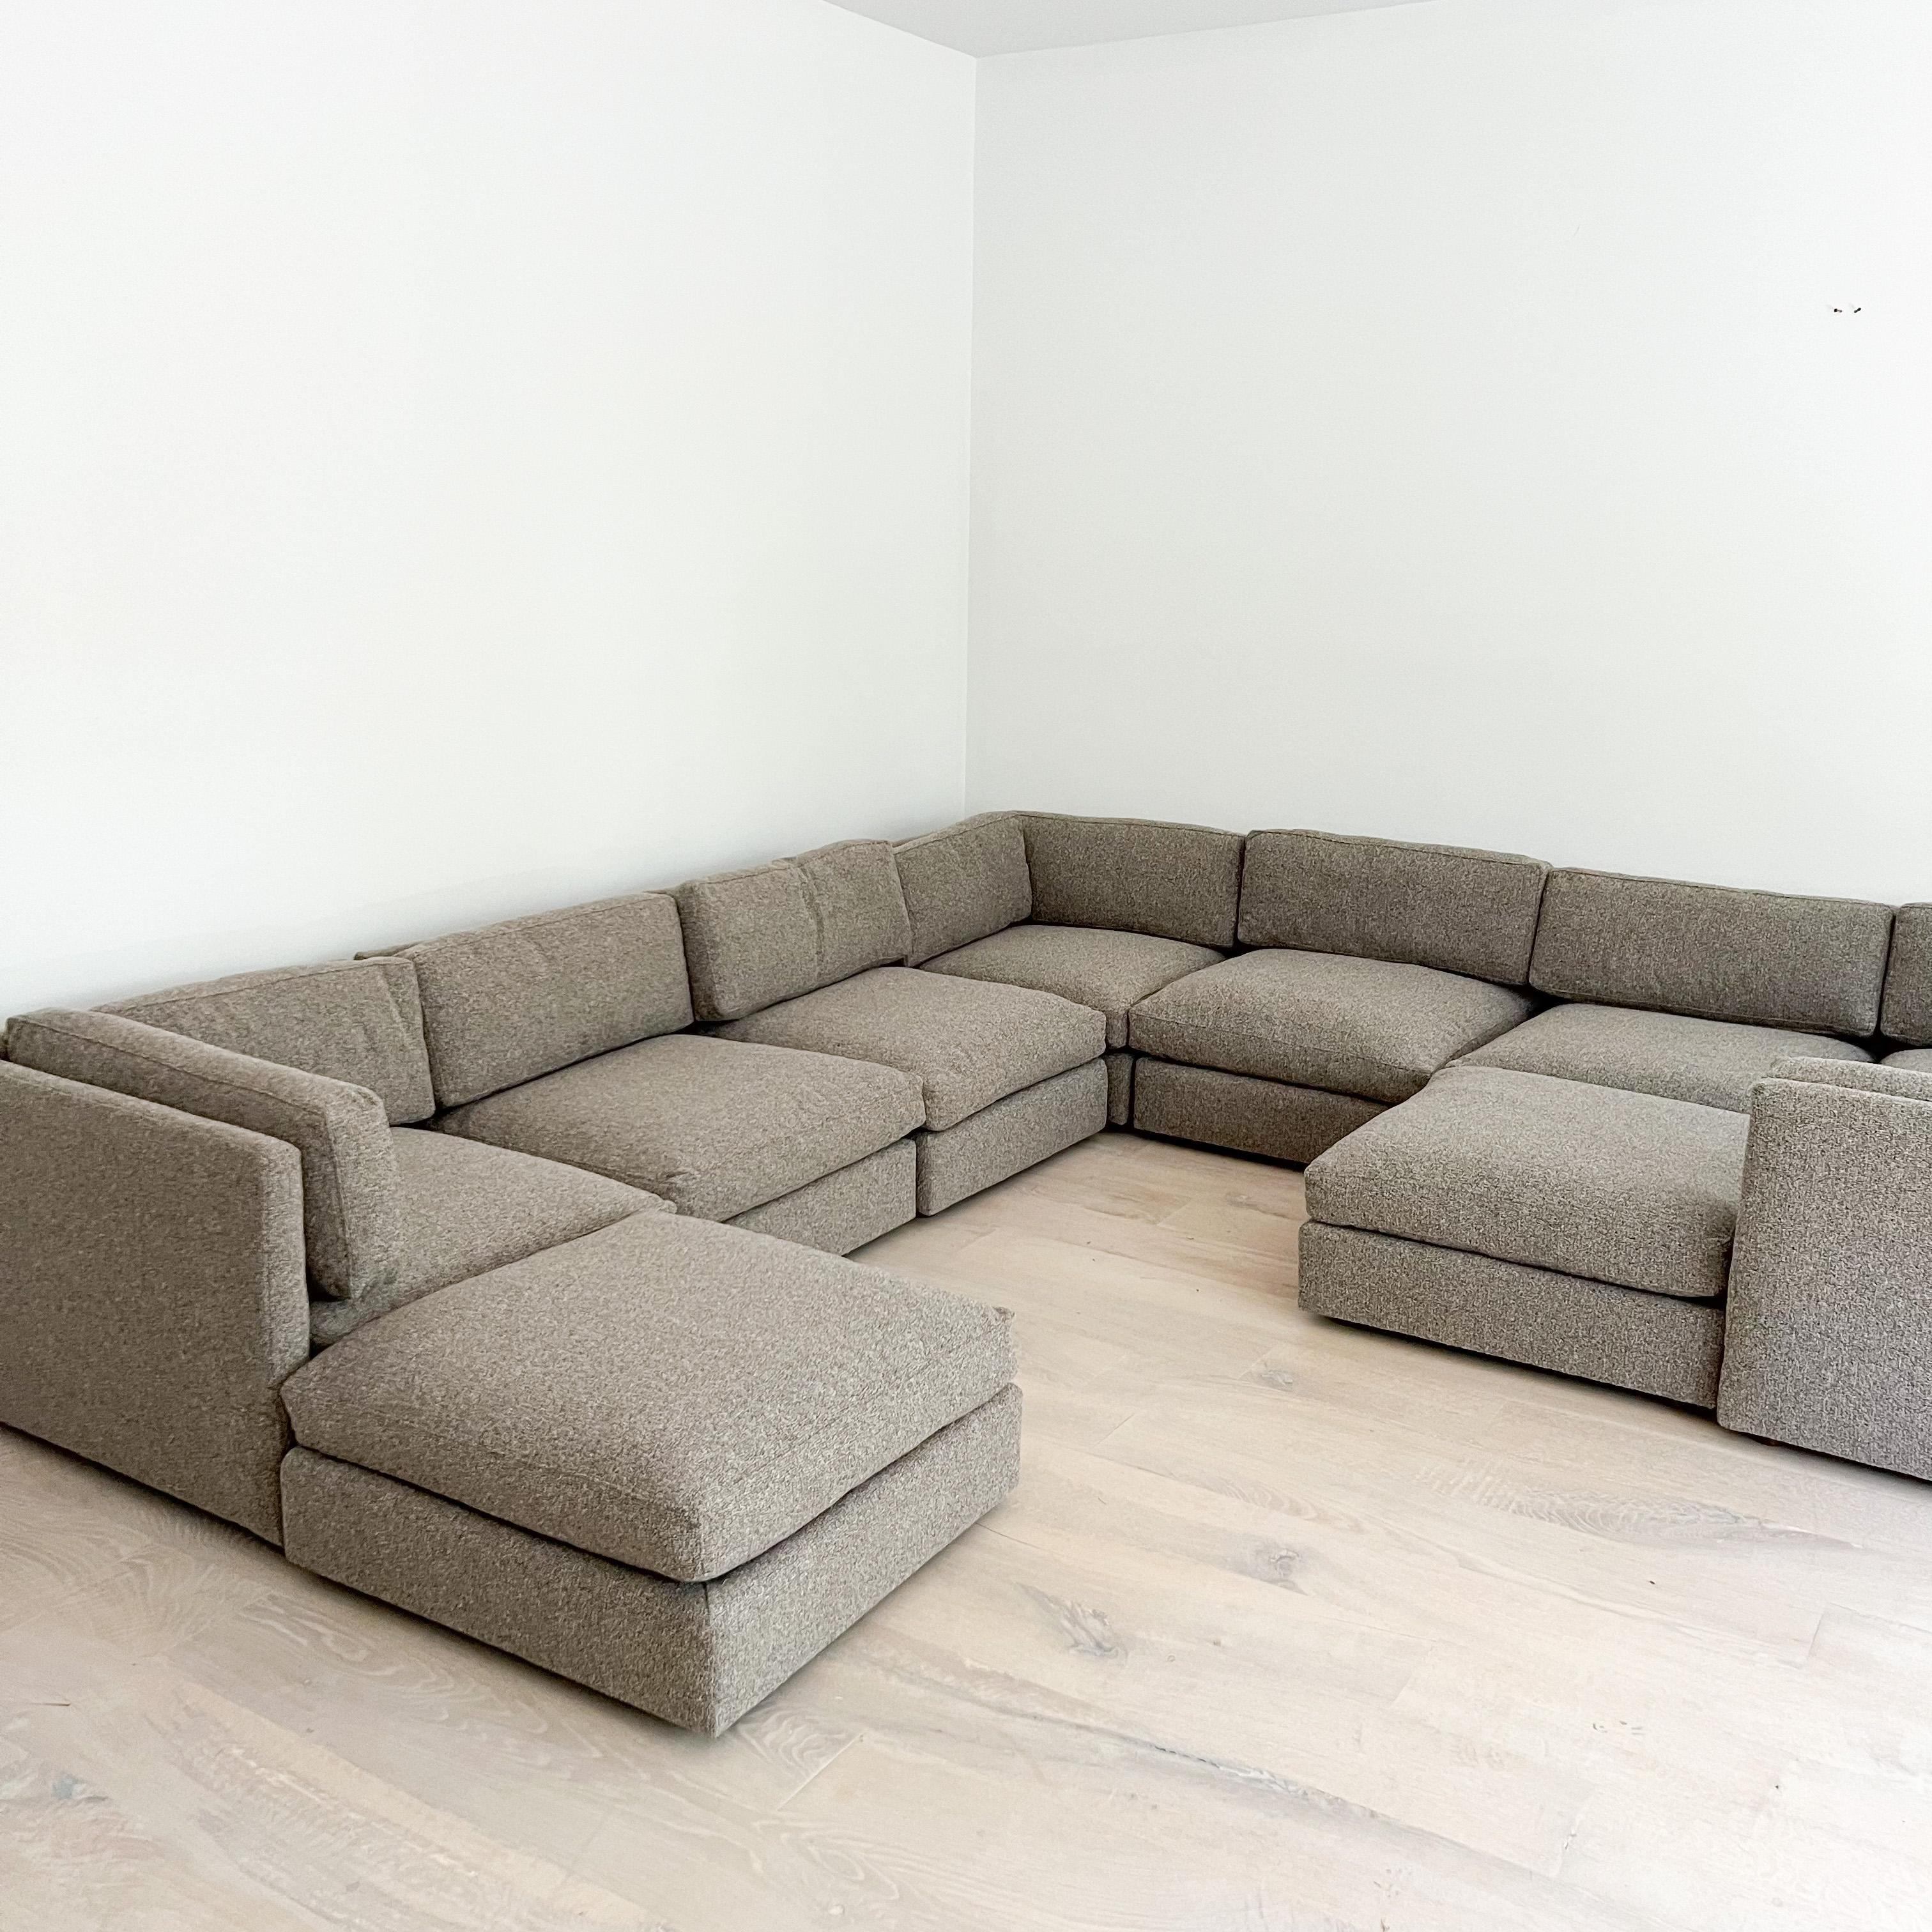 Milo Baughman Attributed 10 Piece Modular Sectional Sofa, New Upholstery 7